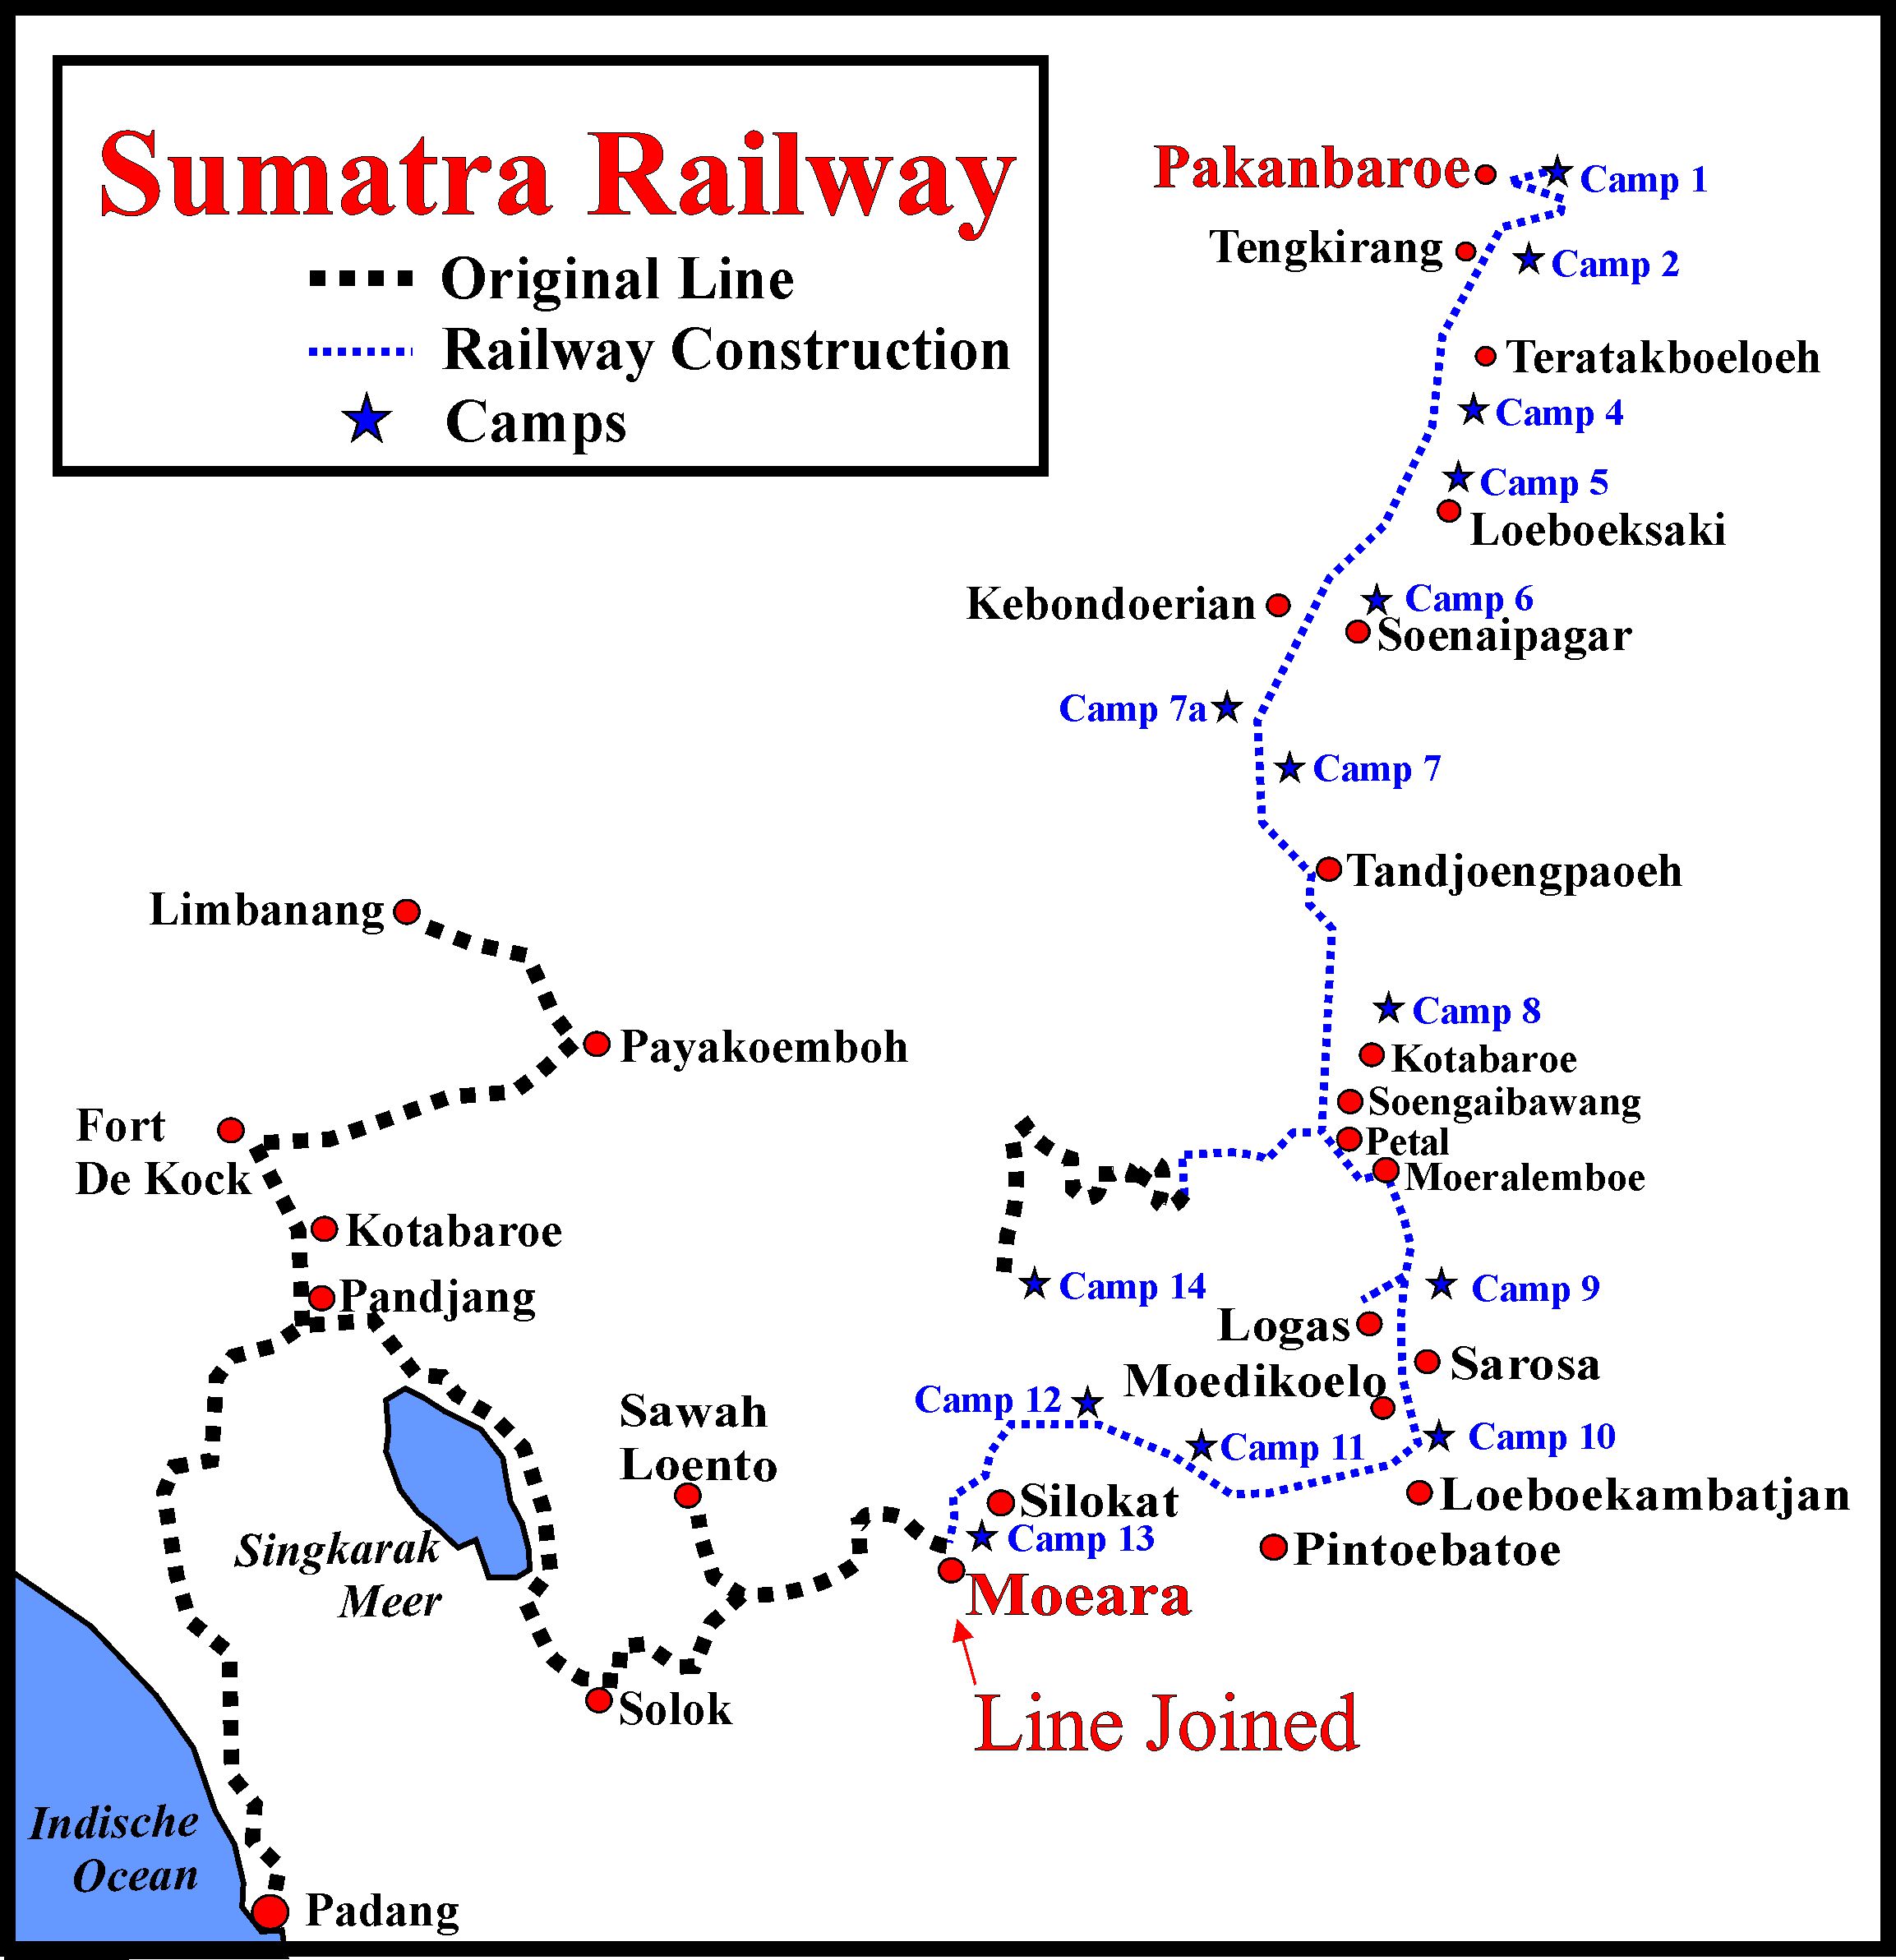 Sumatra Railway